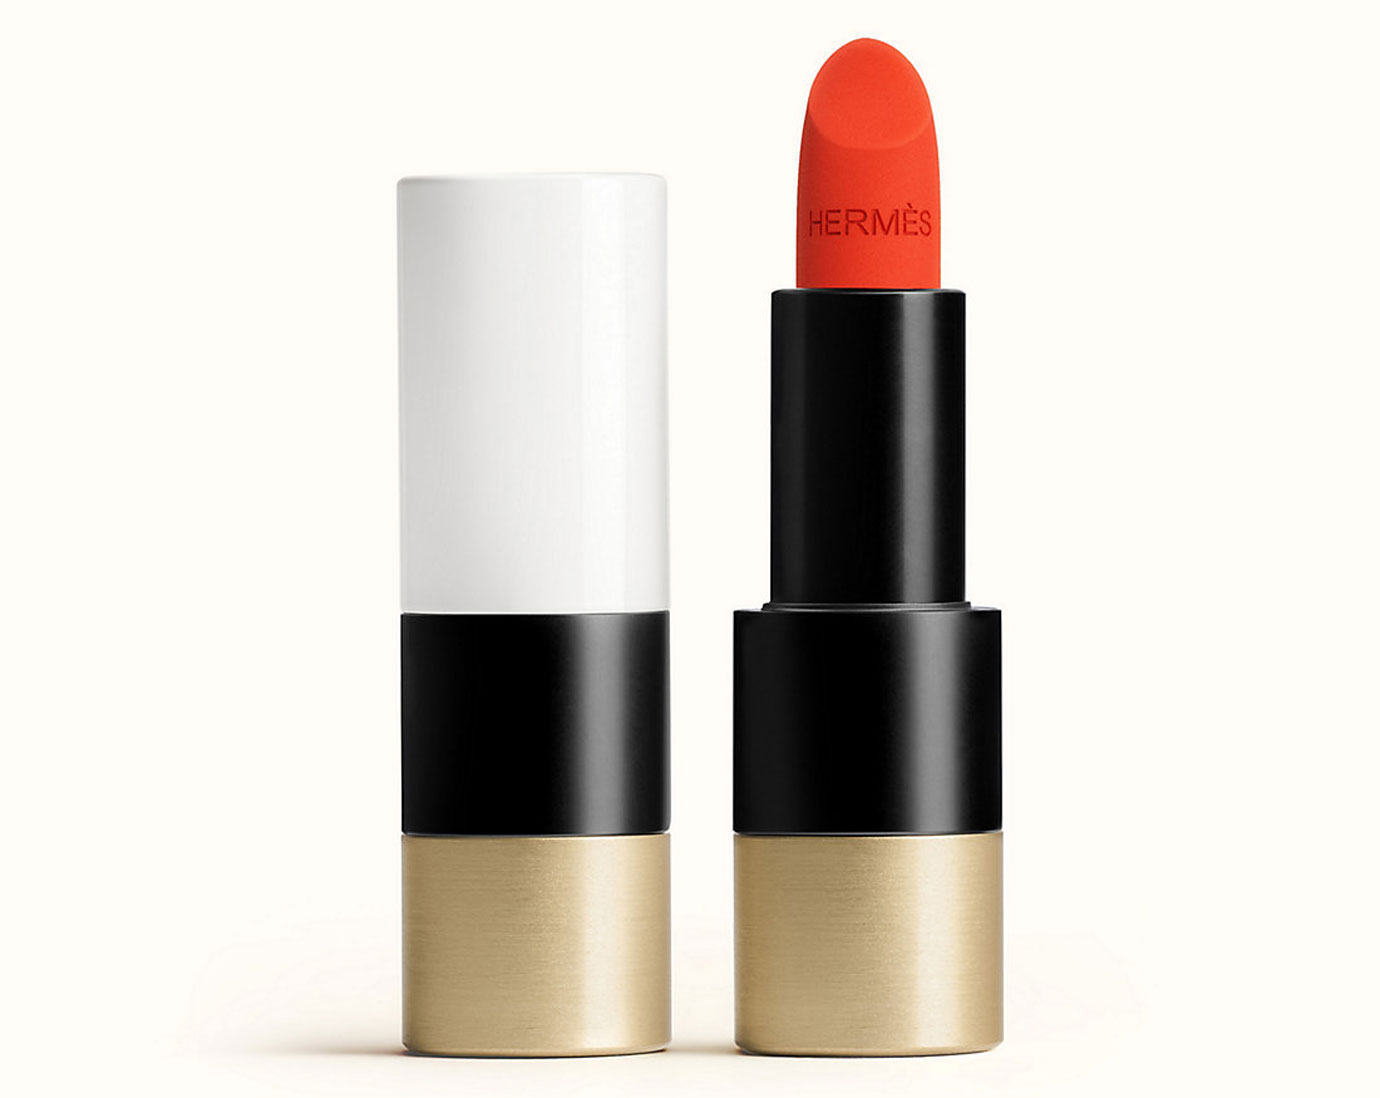 Hermes Matte Lipstick in Rouge Orange.